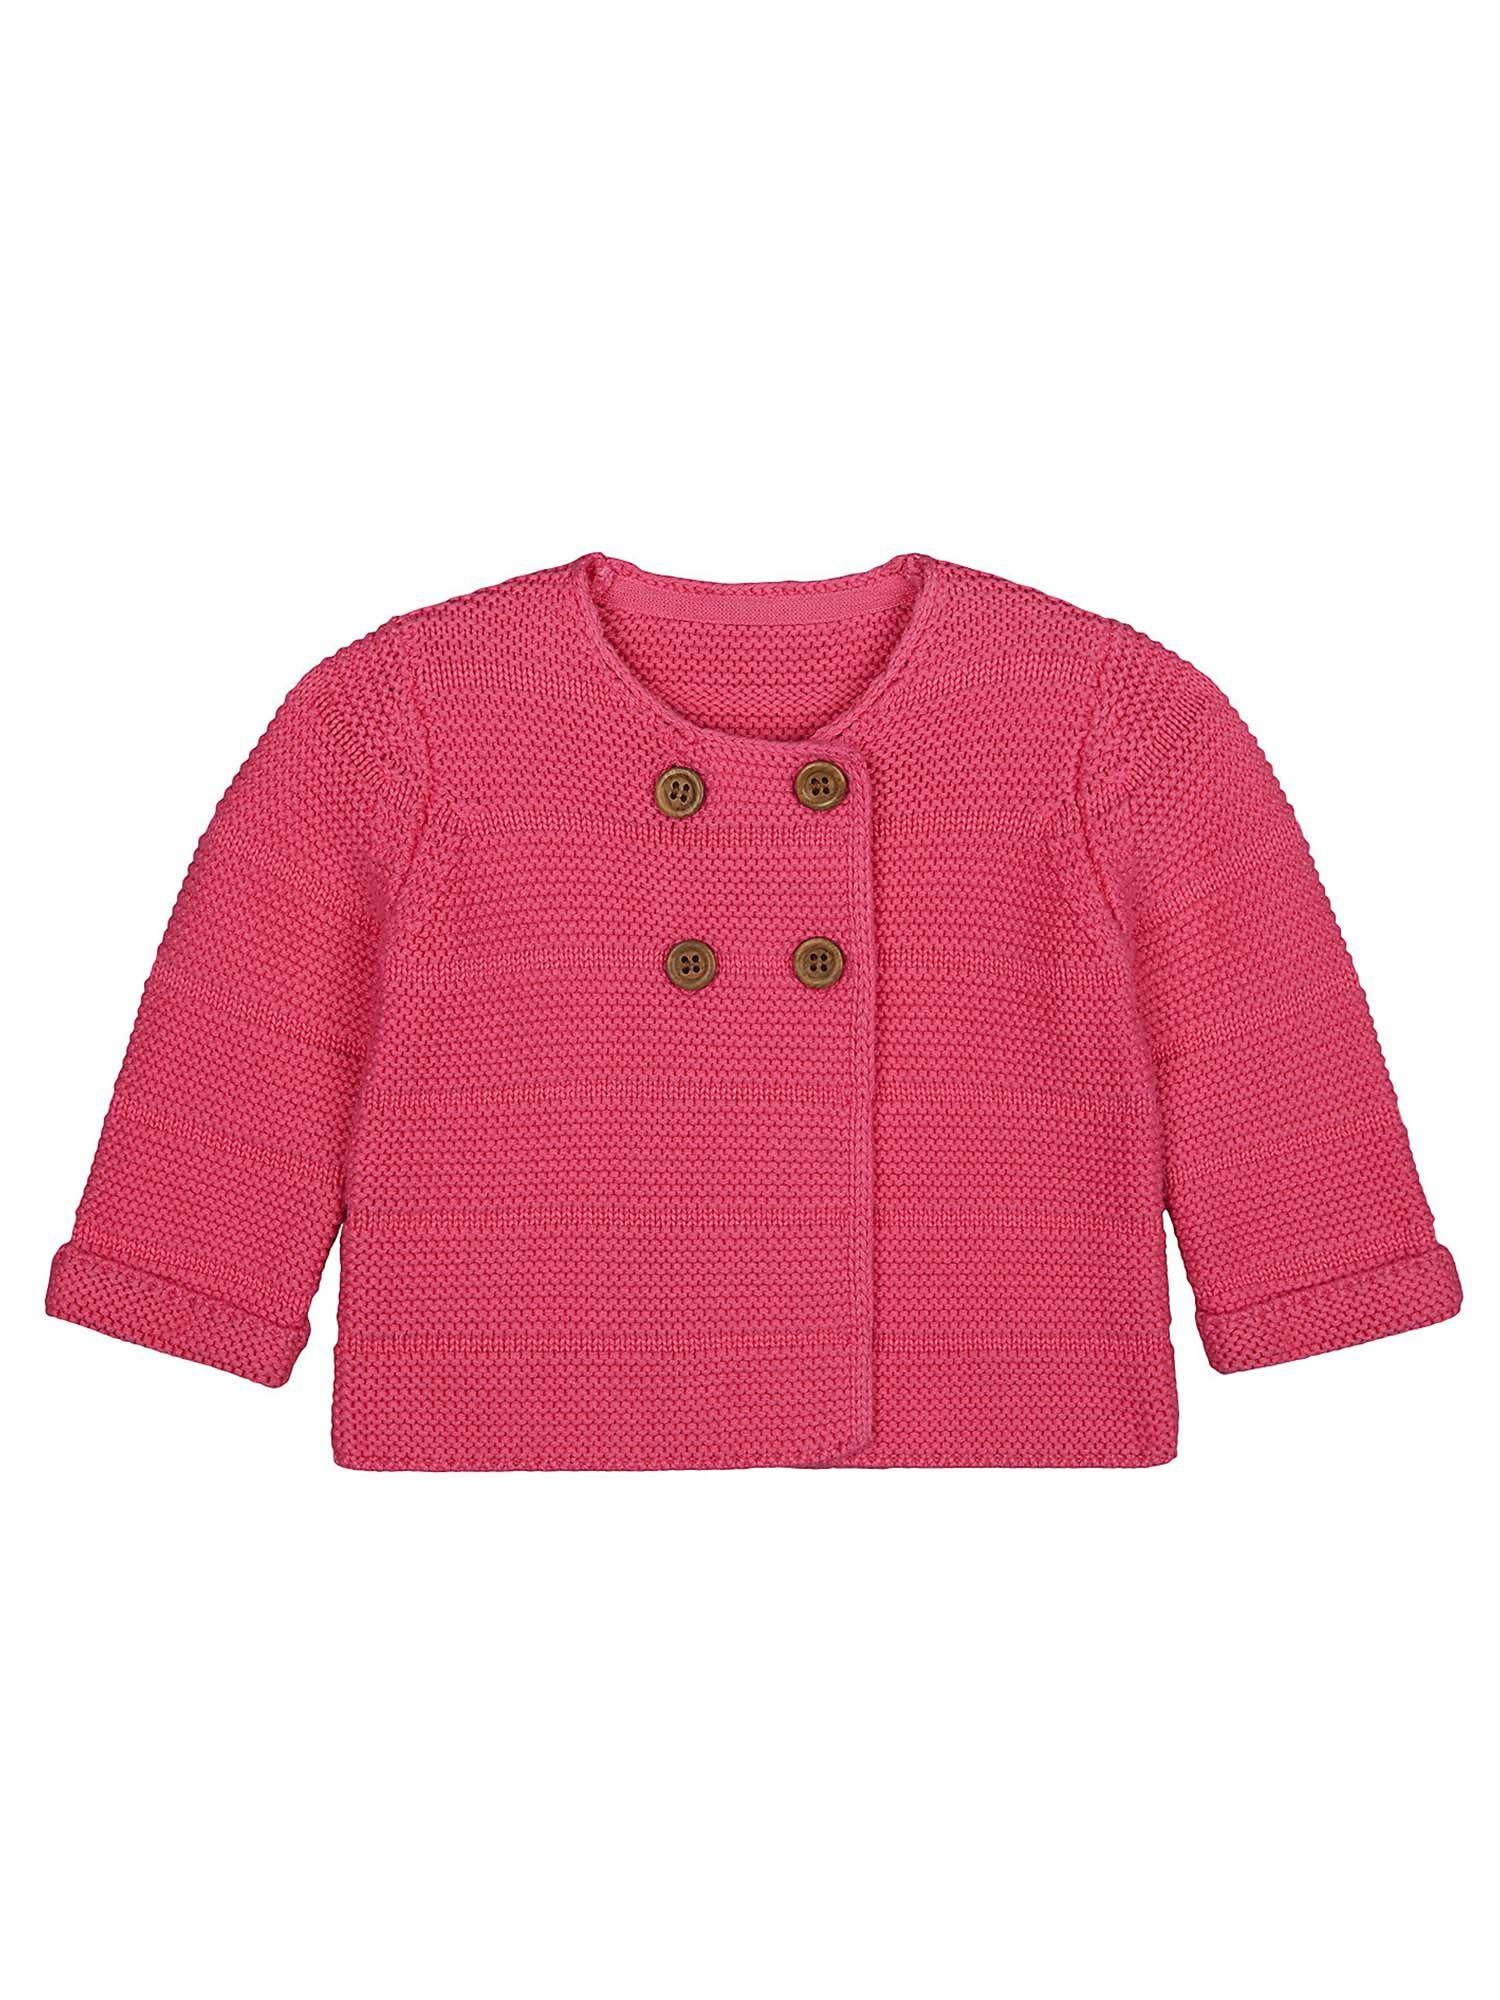 pink plain sweater